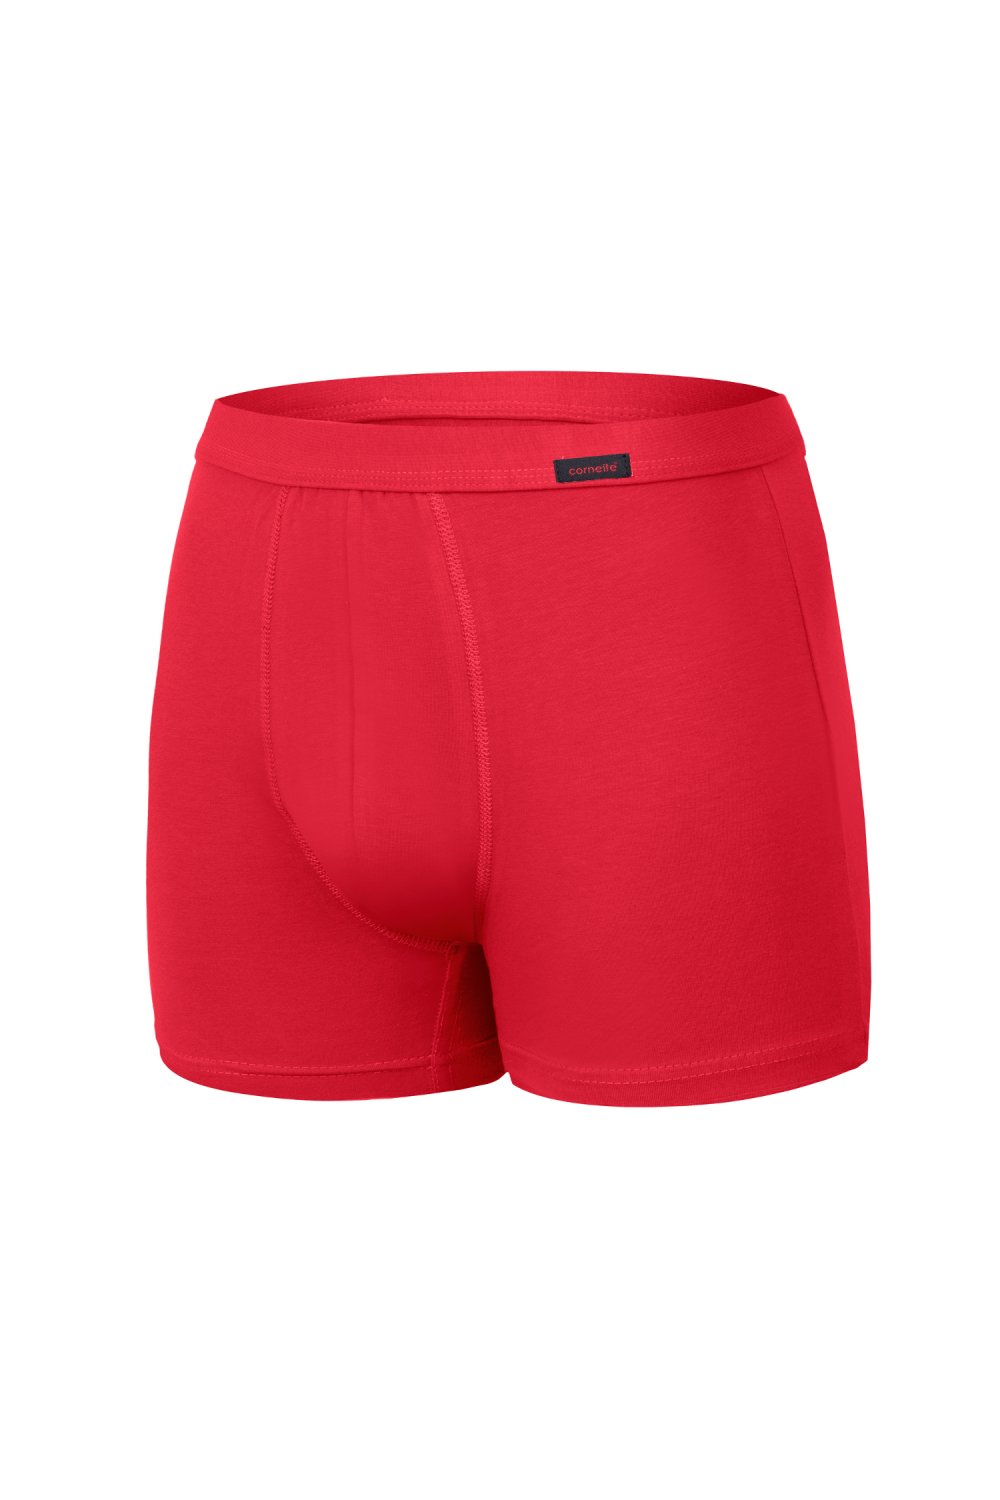 E-shop Pánske boxerky 220 red